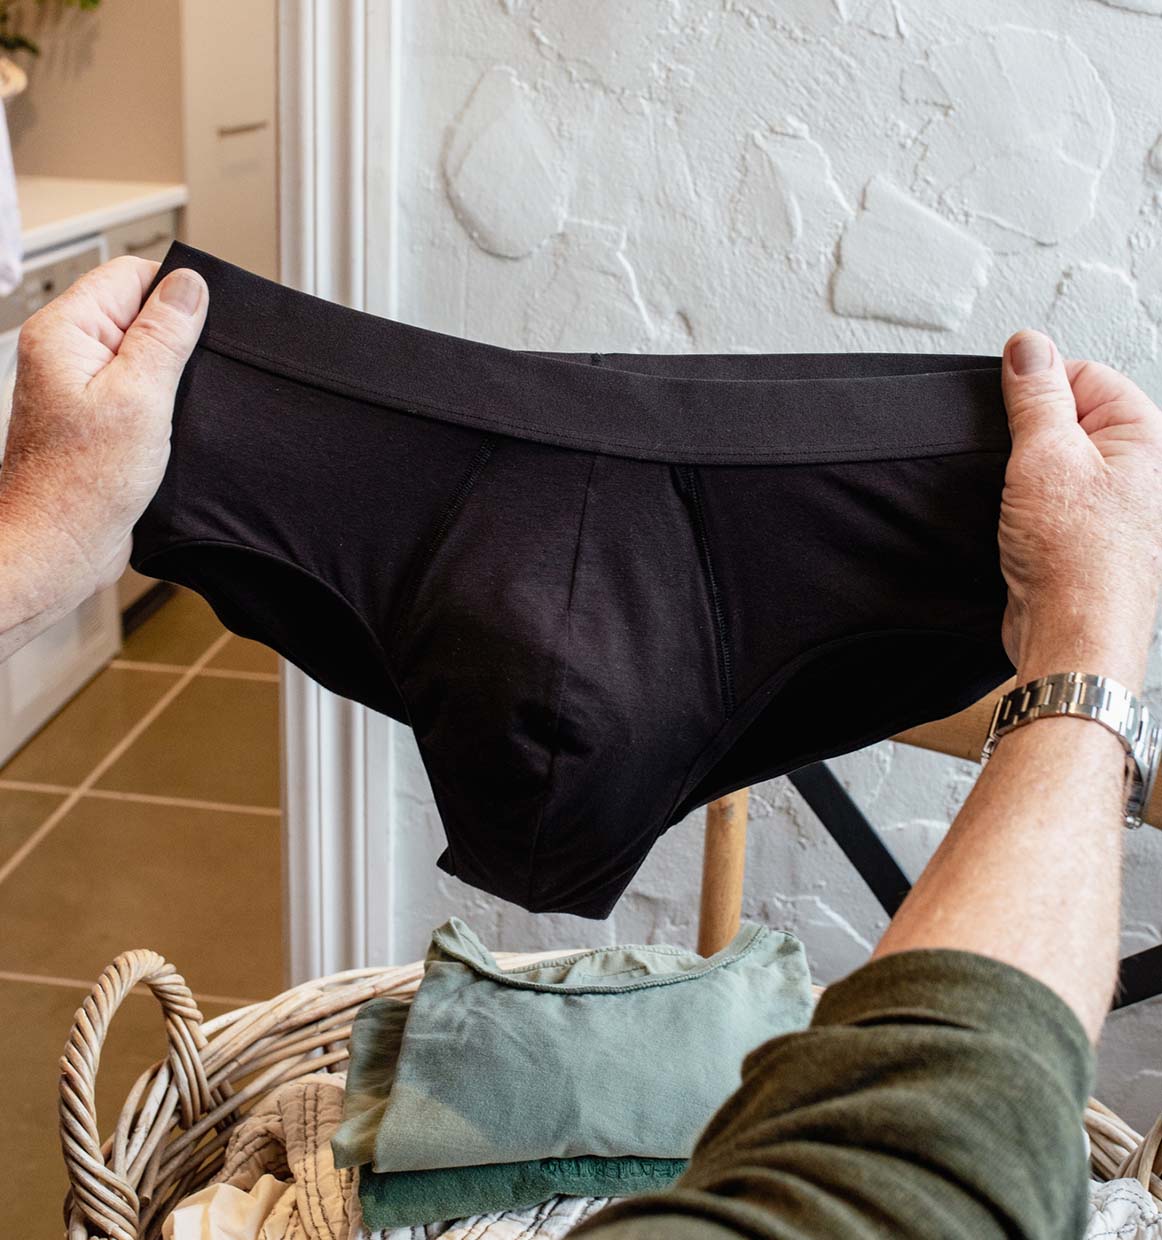  BATTEWA Mens Incontinence Underwear Washable, Leak